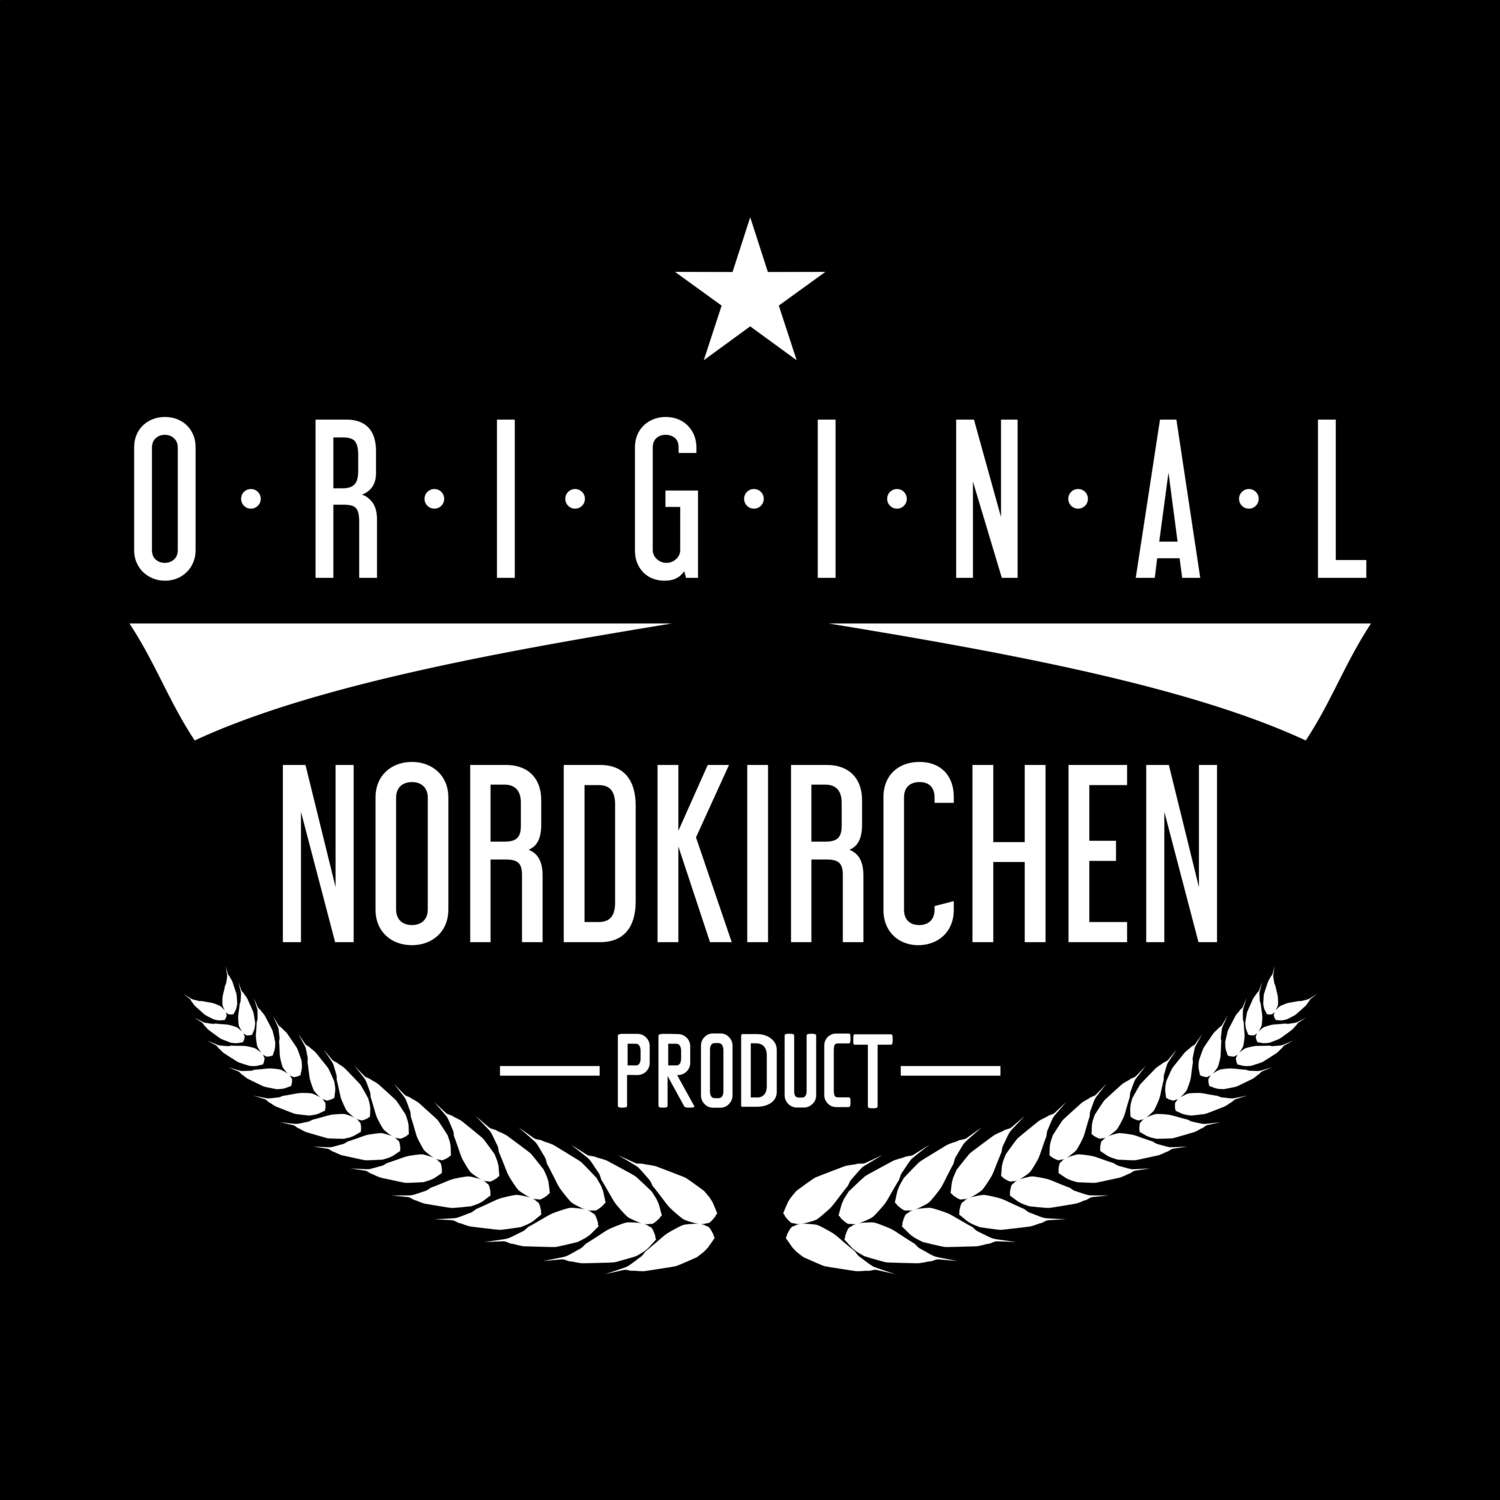 Nordkirchen T-Shirt »Original Product«